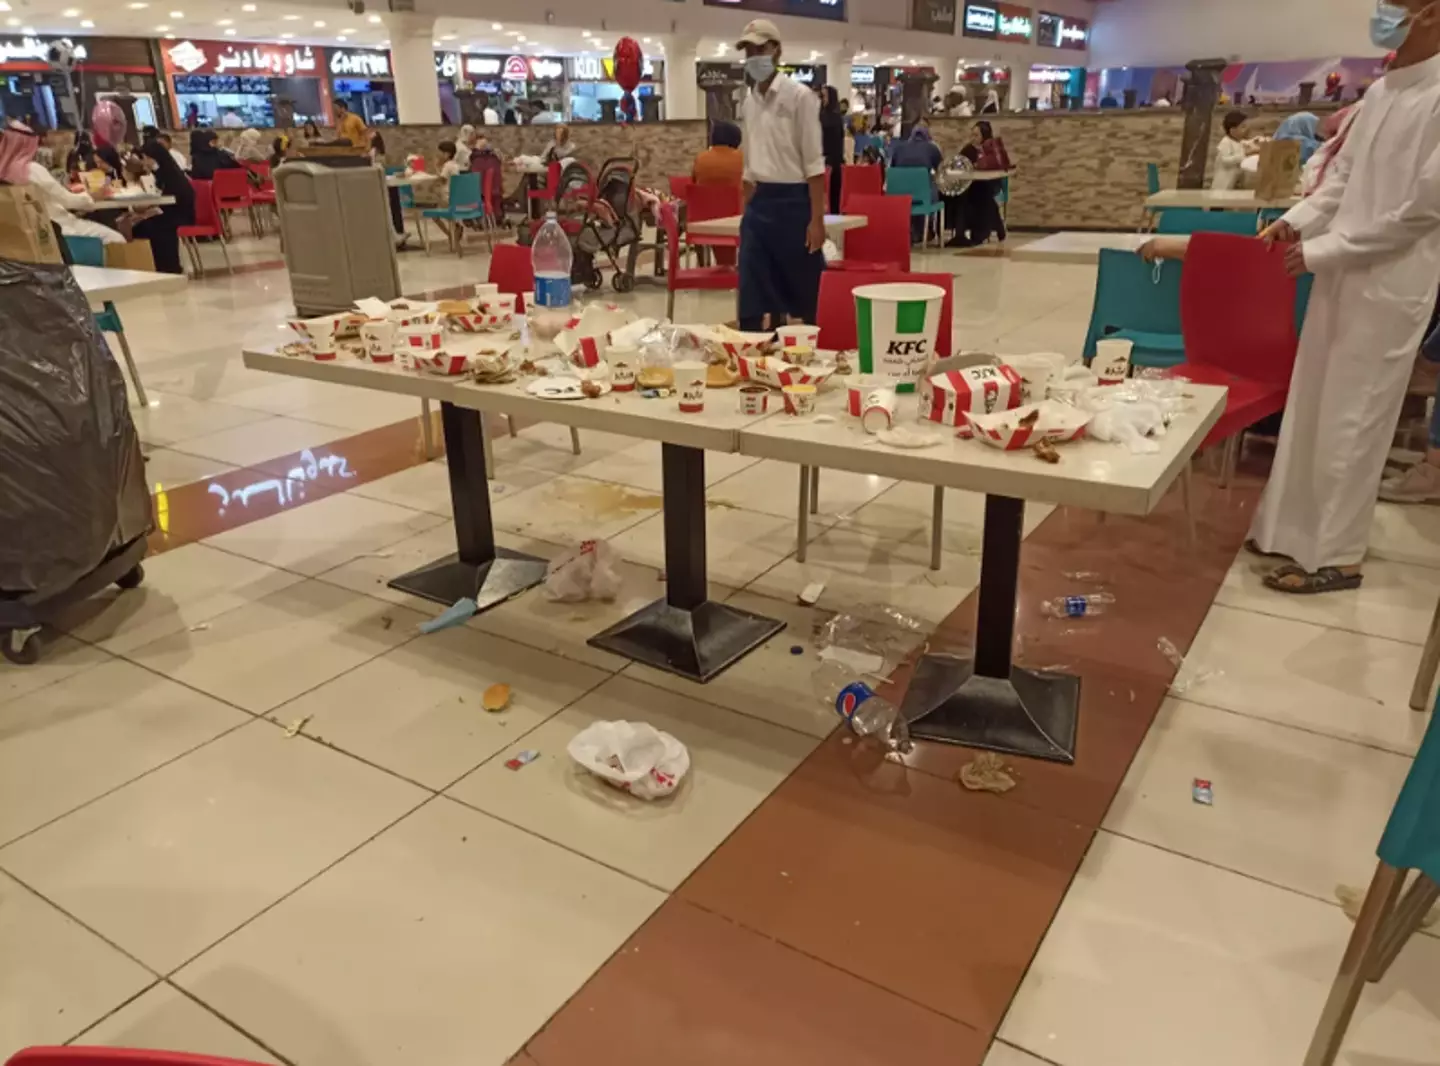 A mountain of rubbish was left at the KFC branch in the Al Othaim Mall food court in Riyadh, Saudi Arabia.